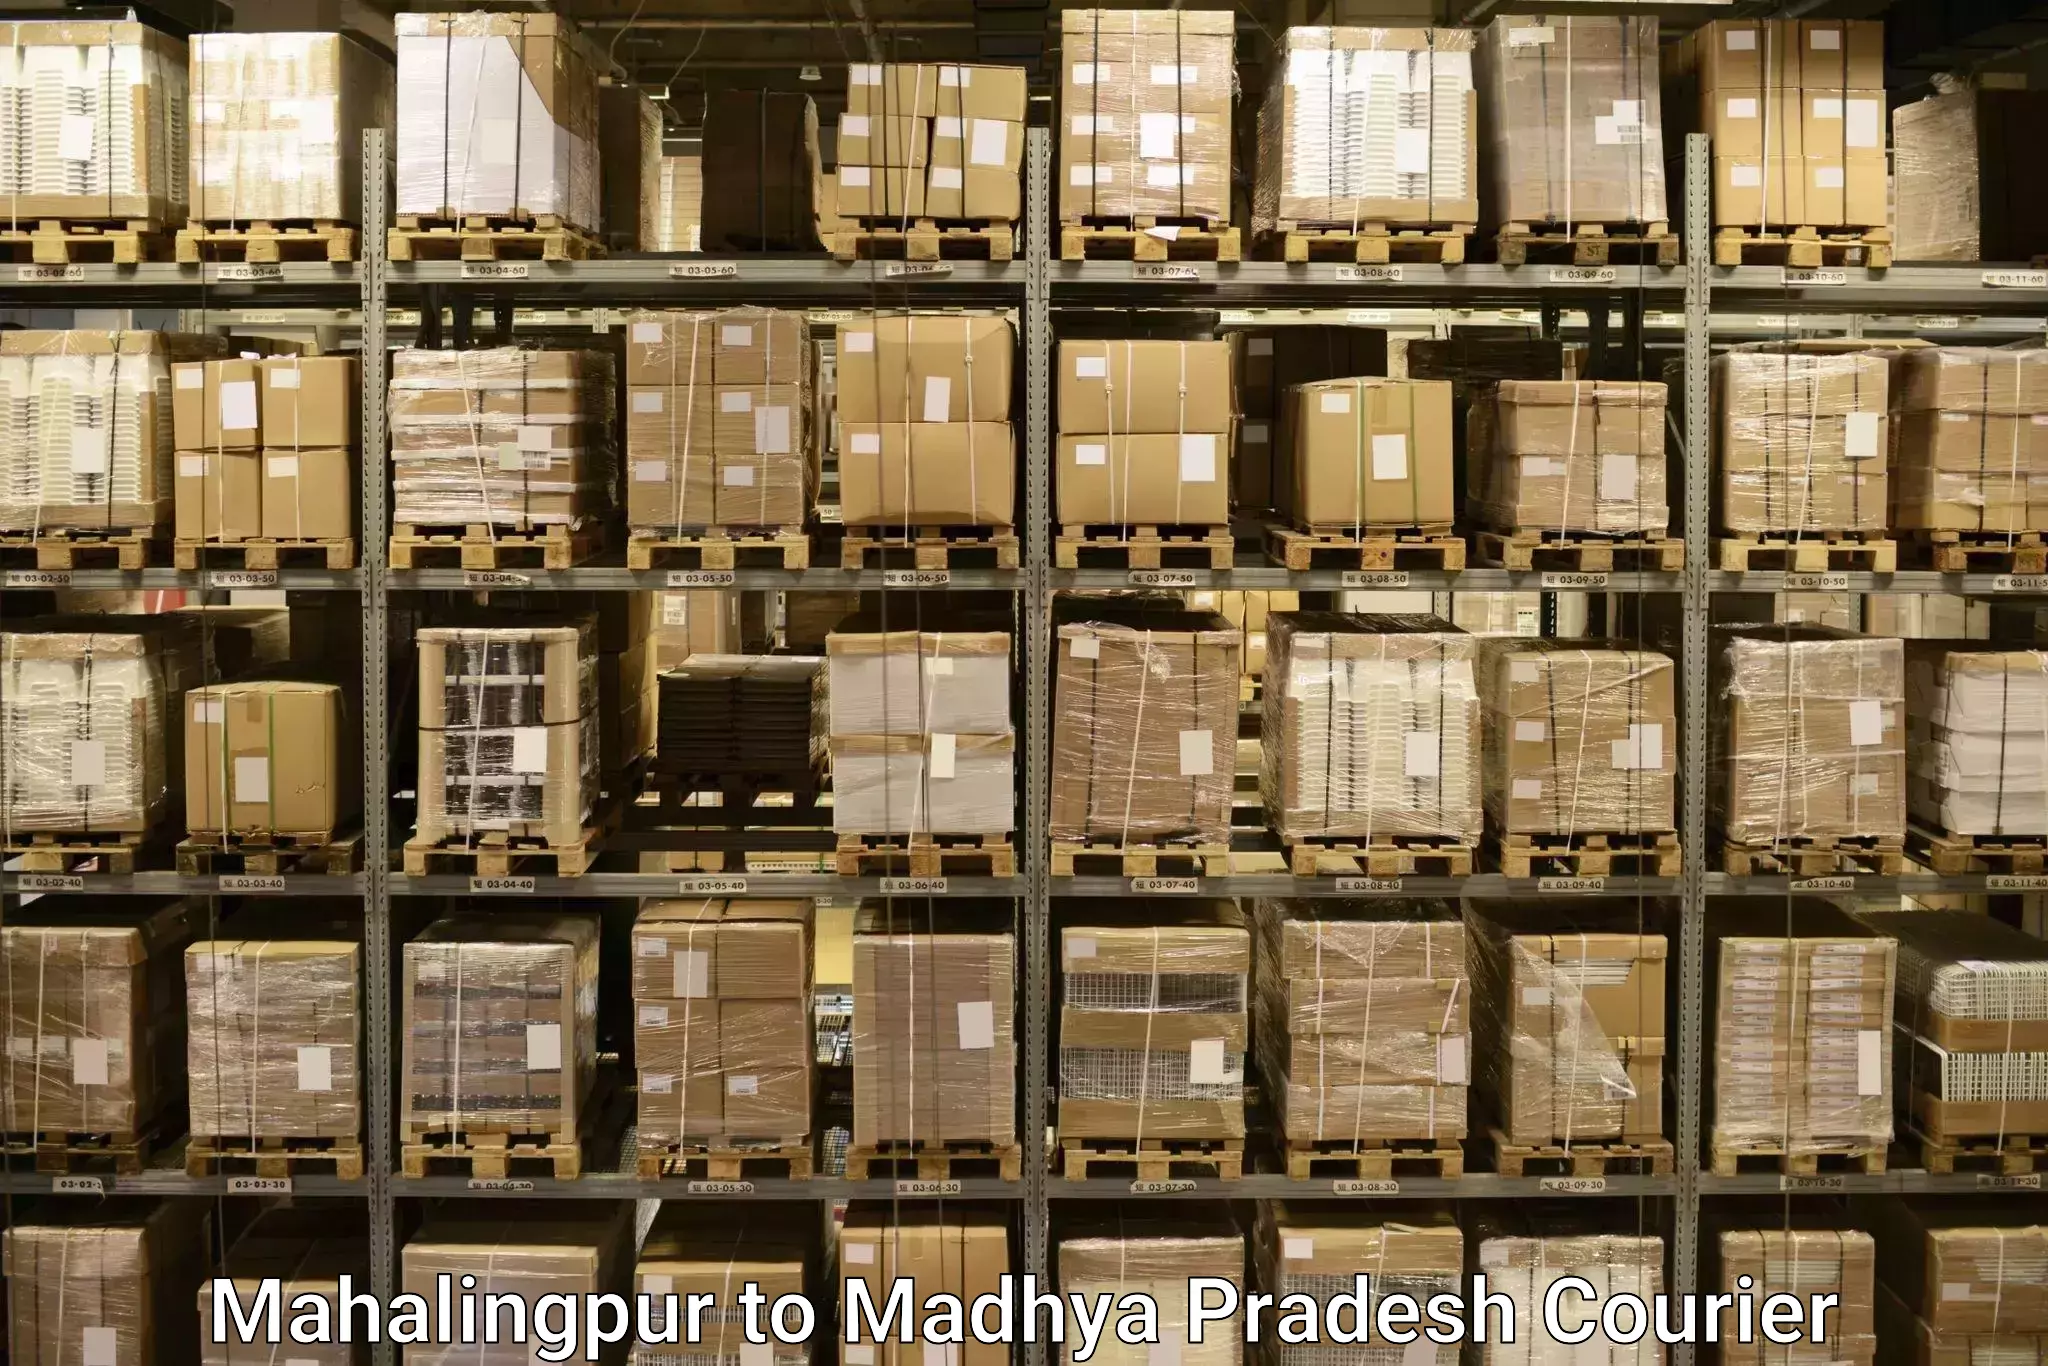 Express luggage delivery in Mahalingpur to Madhya Pradesh